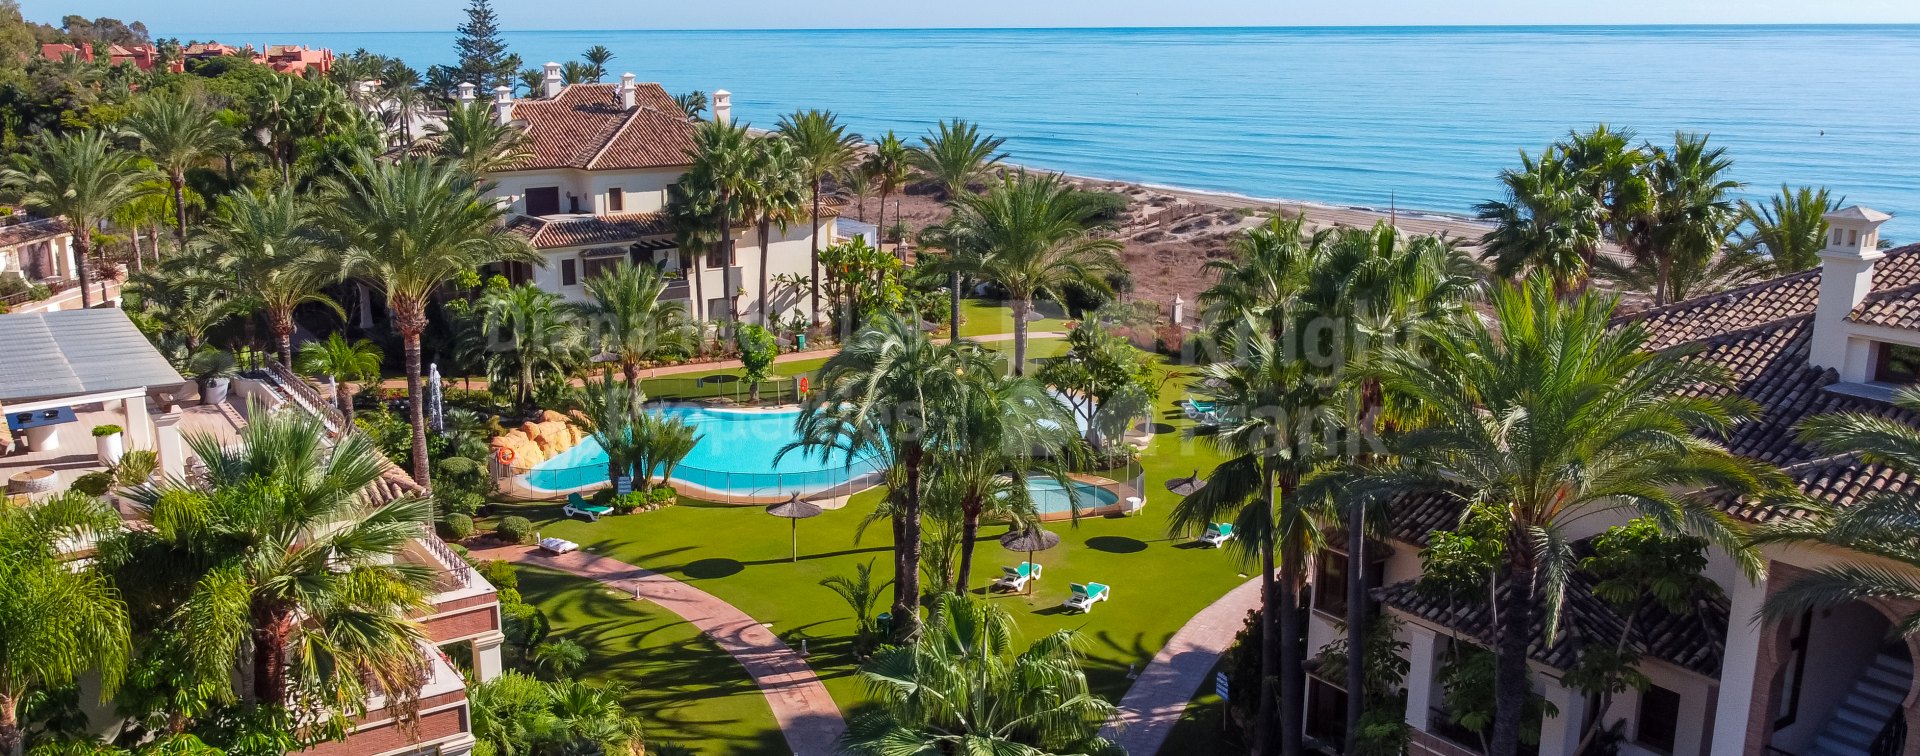 Los Monteros Playa, Appartement en bord de mer entouré de jardins tropicaux